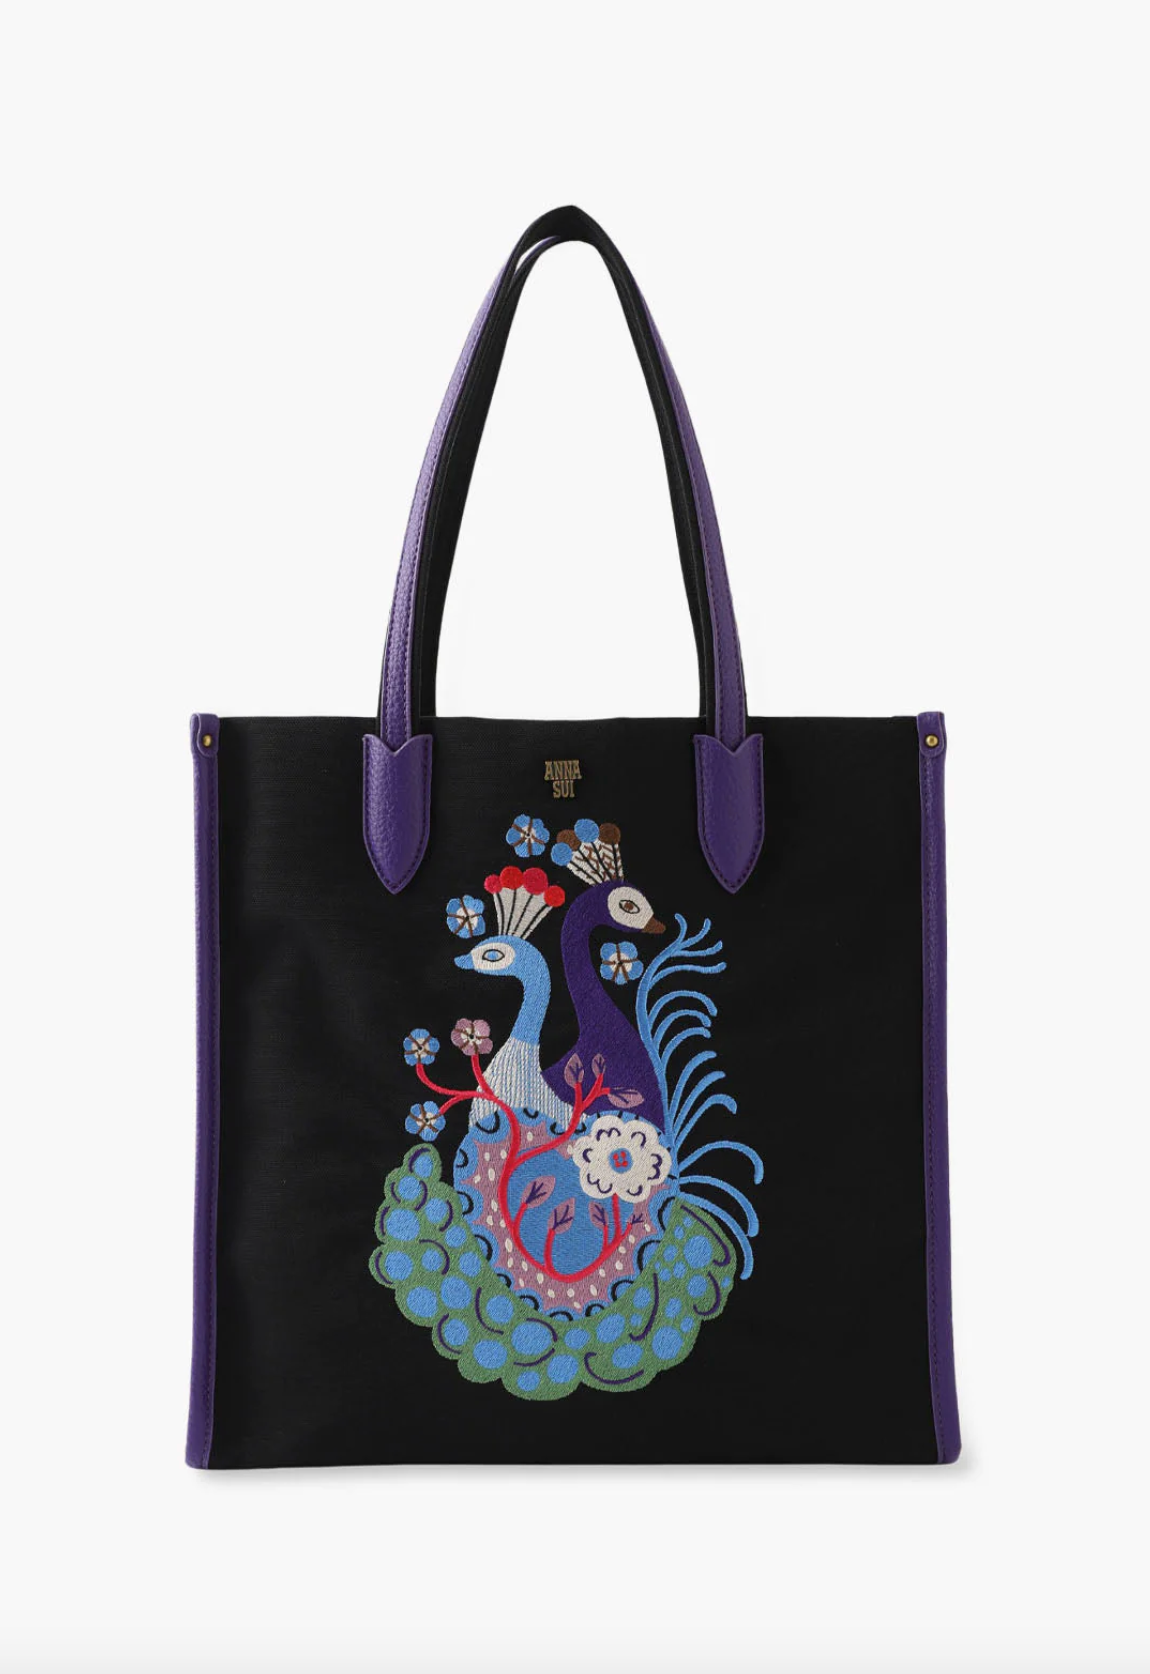 Tote Bag in black print, 2-entrancing peacocks, wildflowers, frilly feathers, 2-purple handles